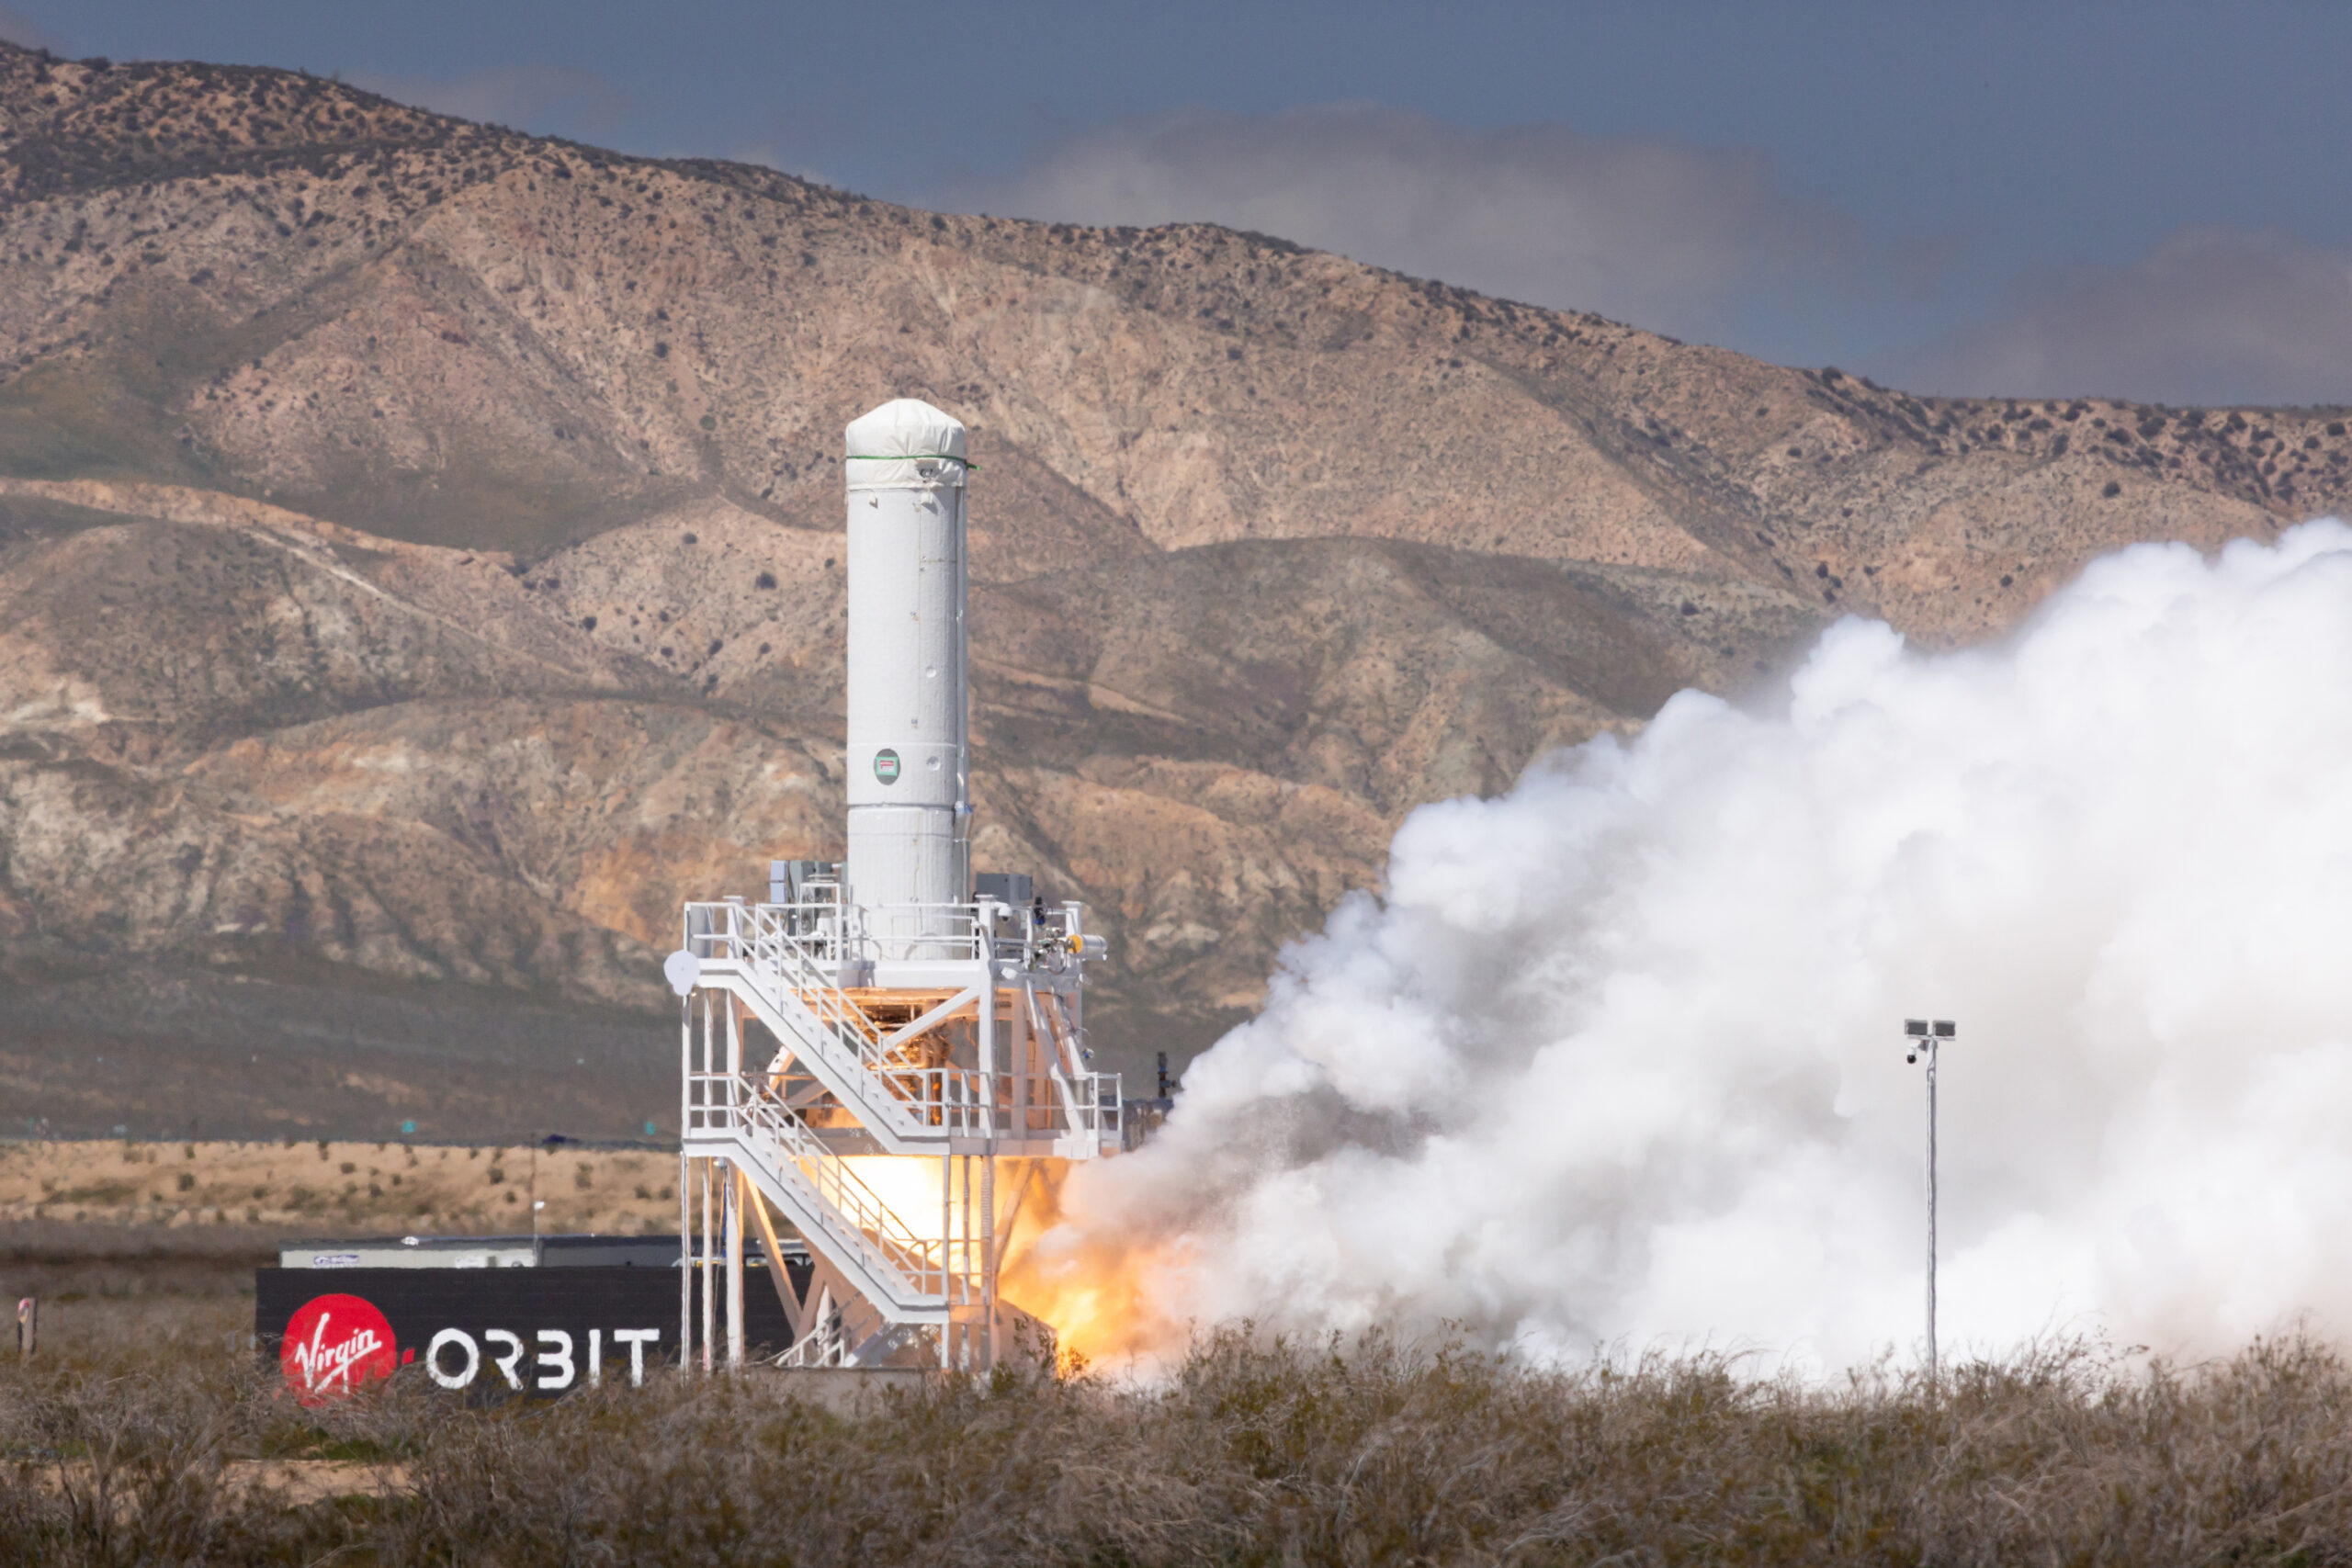 LauncherOne at Mojave desert in 2019.